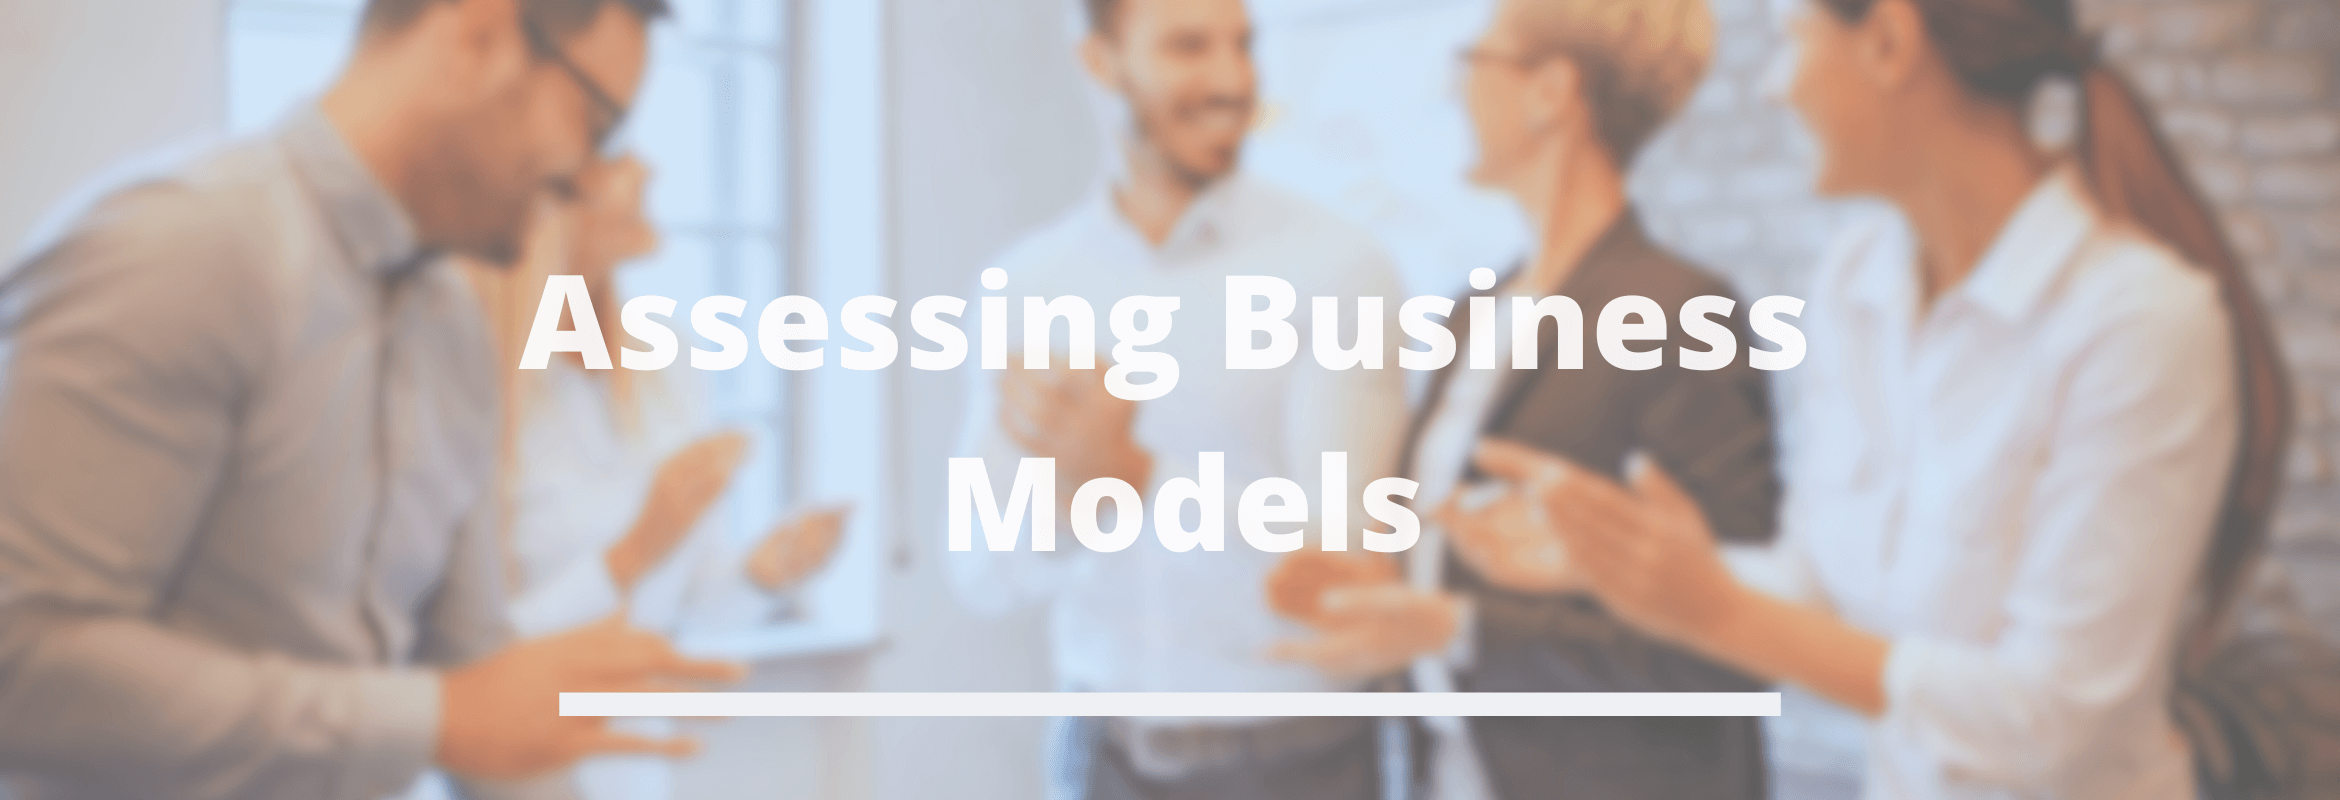 Image of Business Models